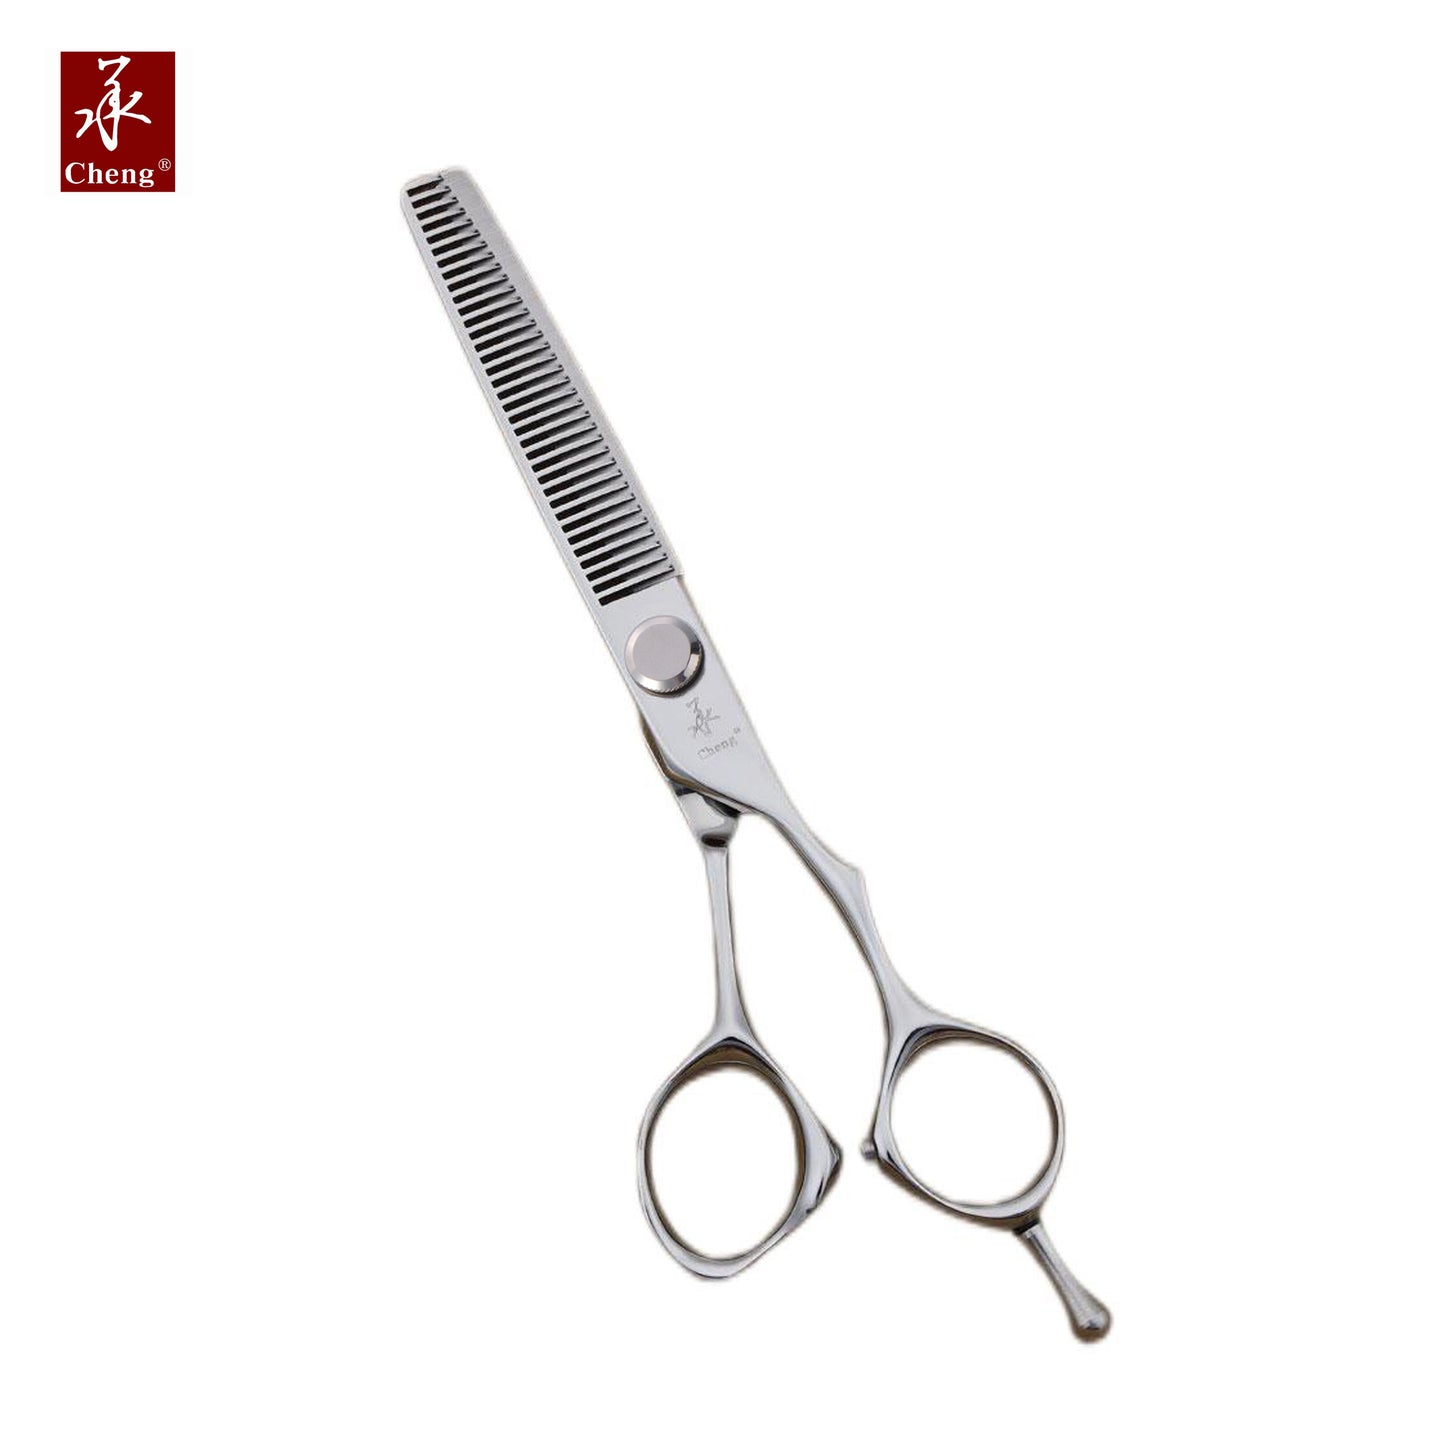 CMA-635 6.0 Inch Hair Thinning Scissors 35Teeth